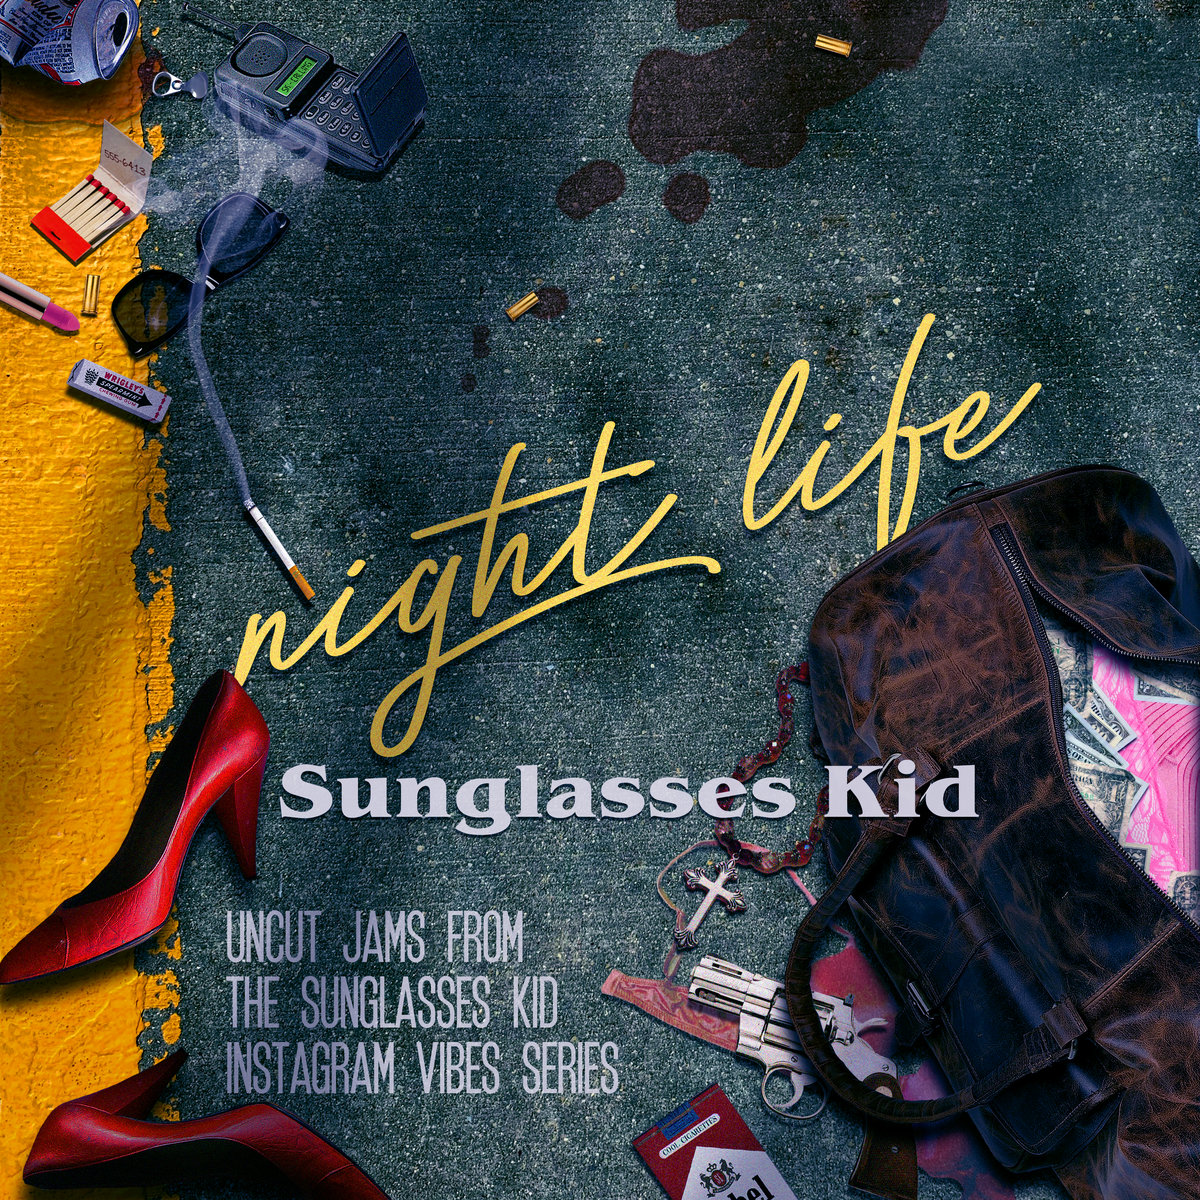 a2964856745 10 - Sunglasses Kid shares Night Life EP